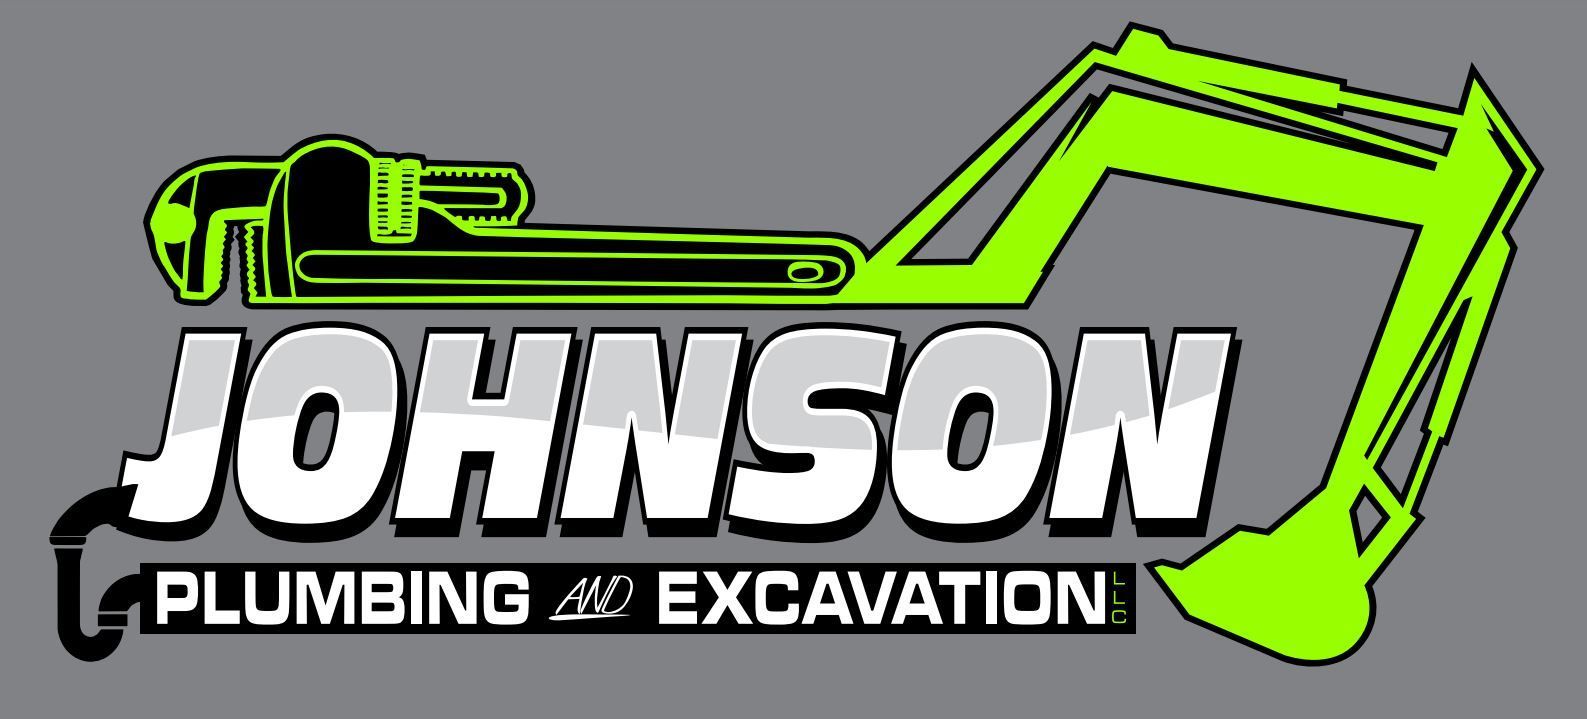 Johnson Plumbing & Excavation - Logo